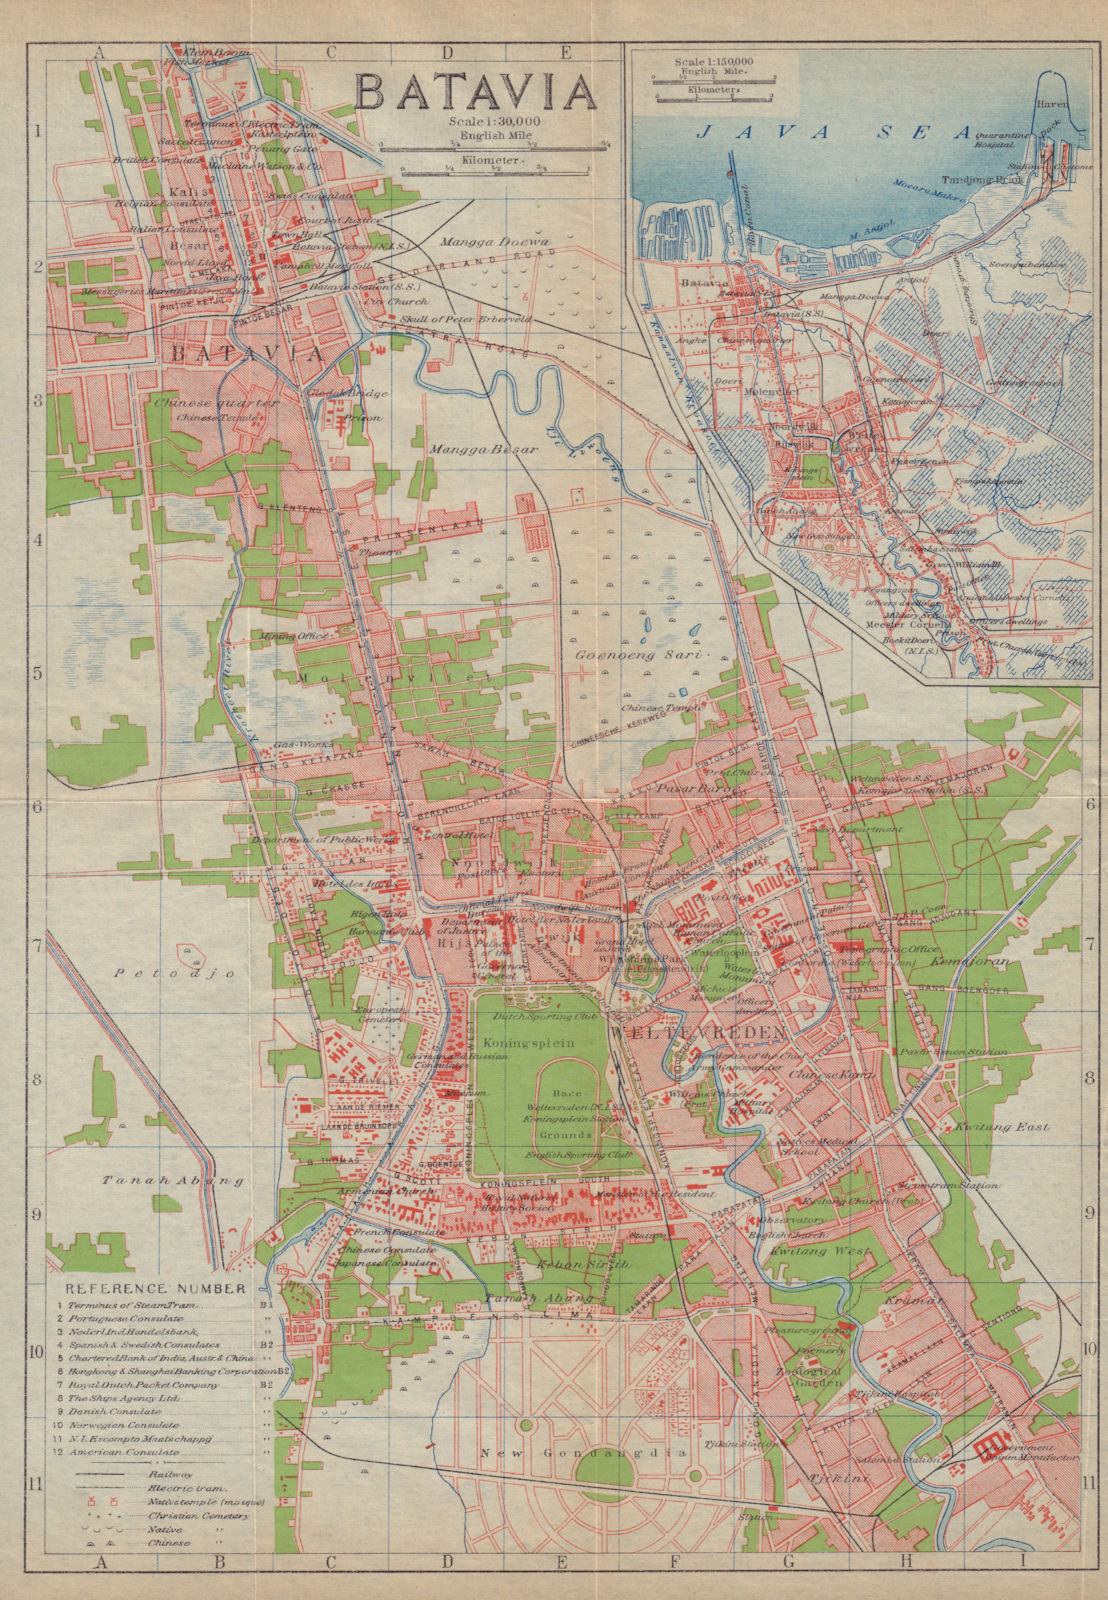 Associate Product Batavia antique town city plan. Jakarta. Indonesia 1917 old map chart